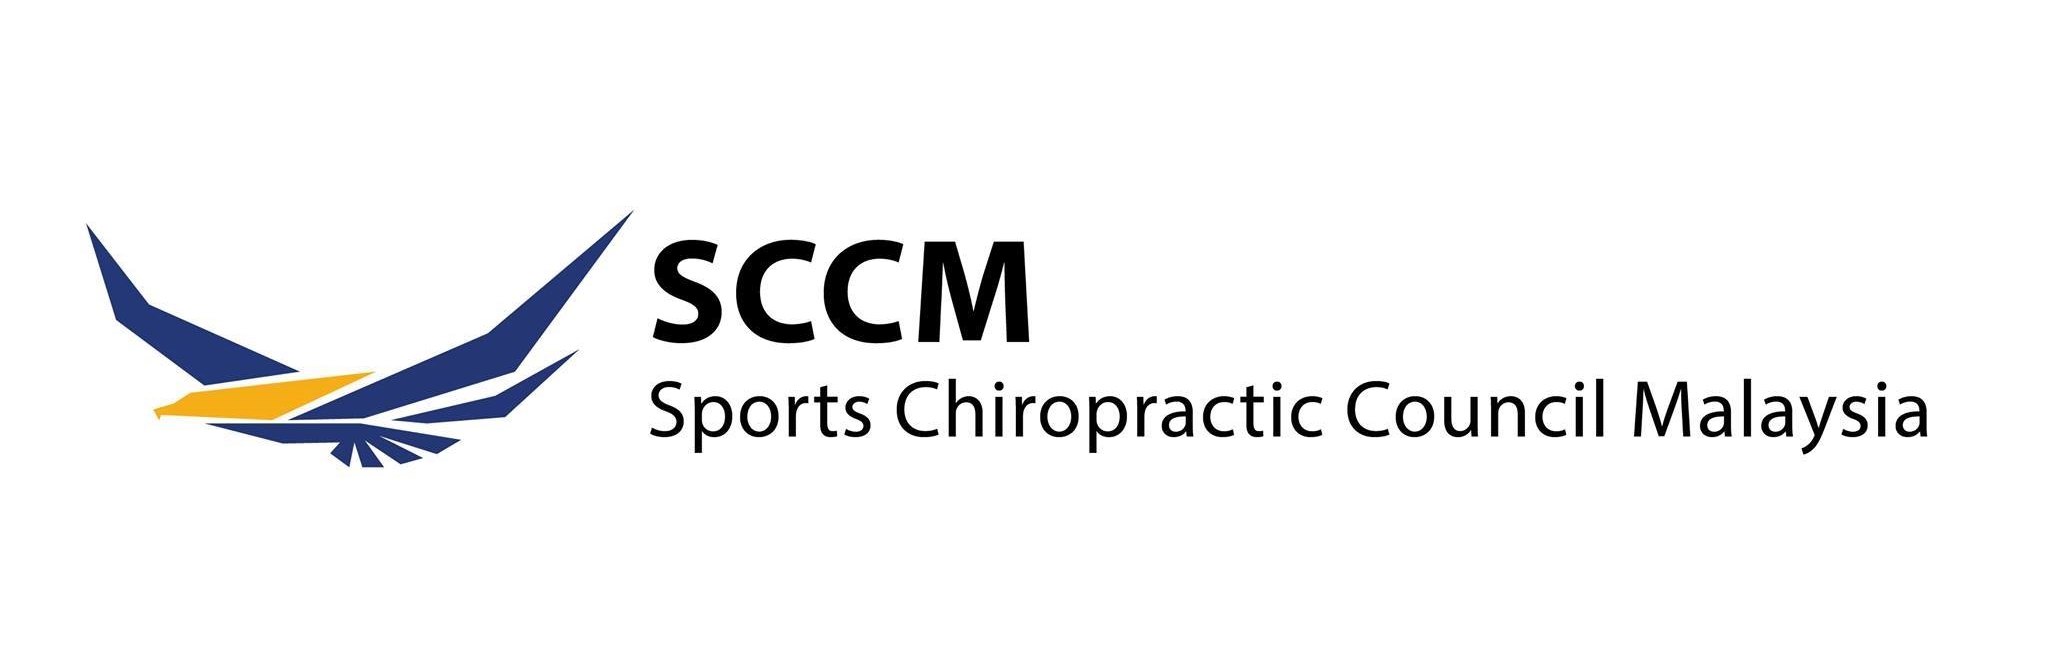 About FICS - FICS - International Federation of Sports Chiropractic